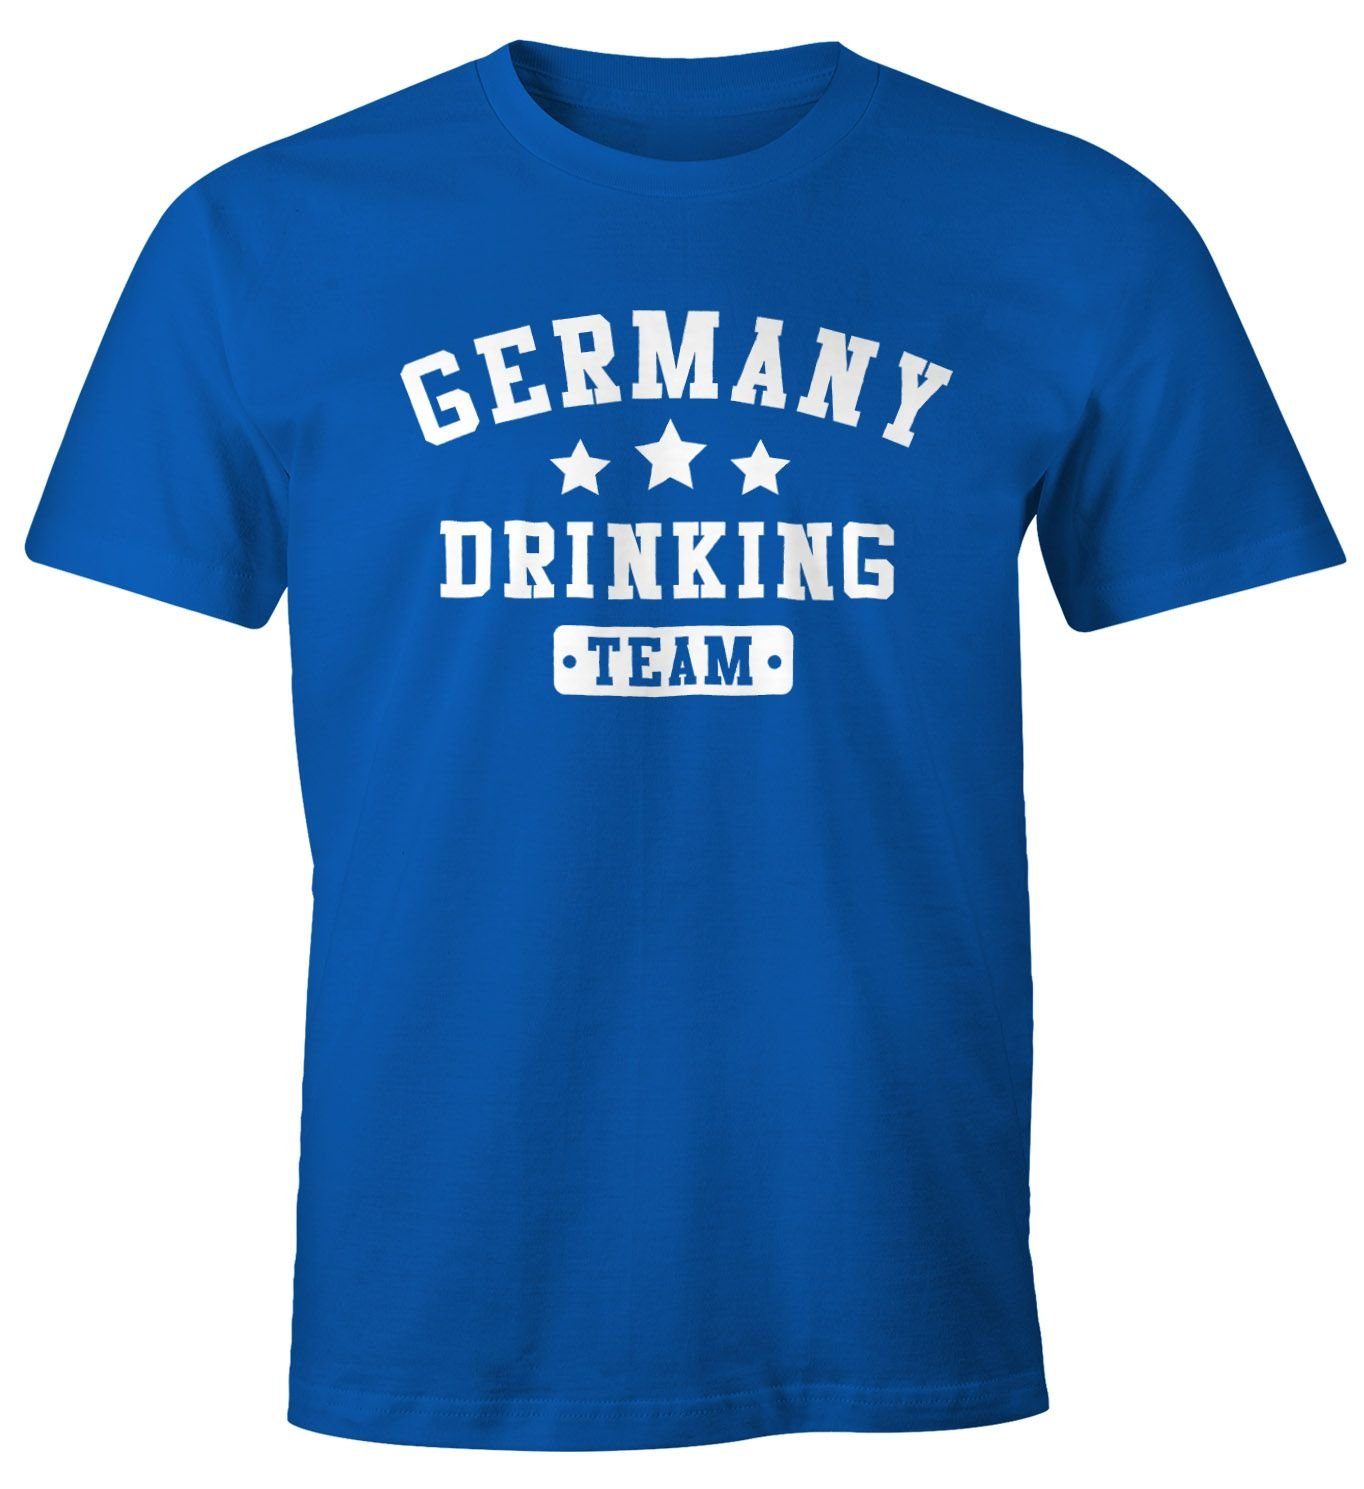 Moonworks® blau MoonWorks Germany mit Print Drinking Bier Team Print-Shirt T-Shirt Fun-Shirt Herren